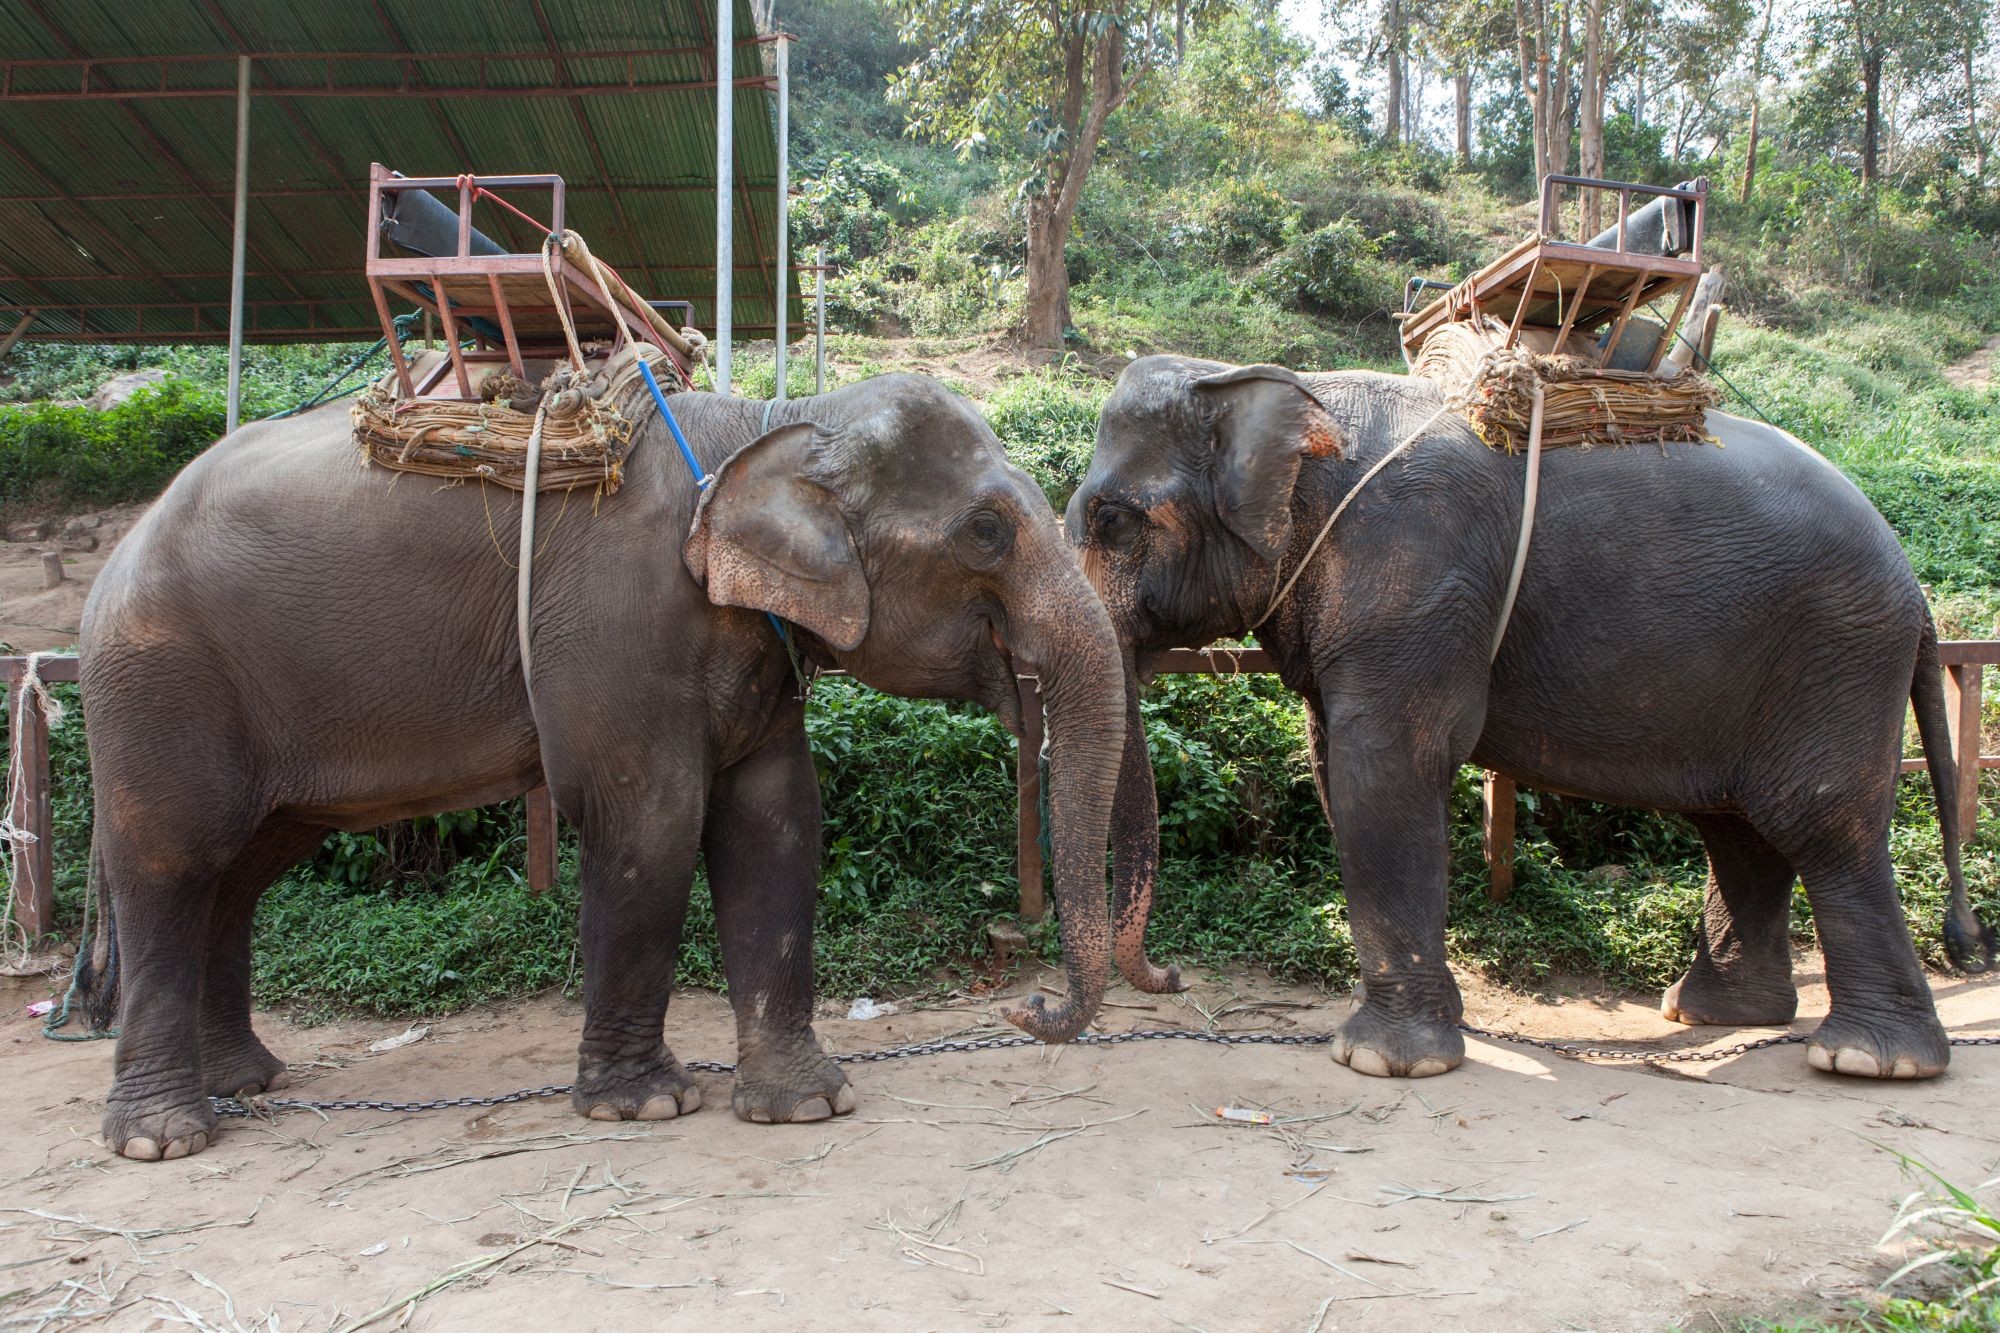 Wild Animal Entertainment - Elephant Ride Cruelty - World Animal Protection